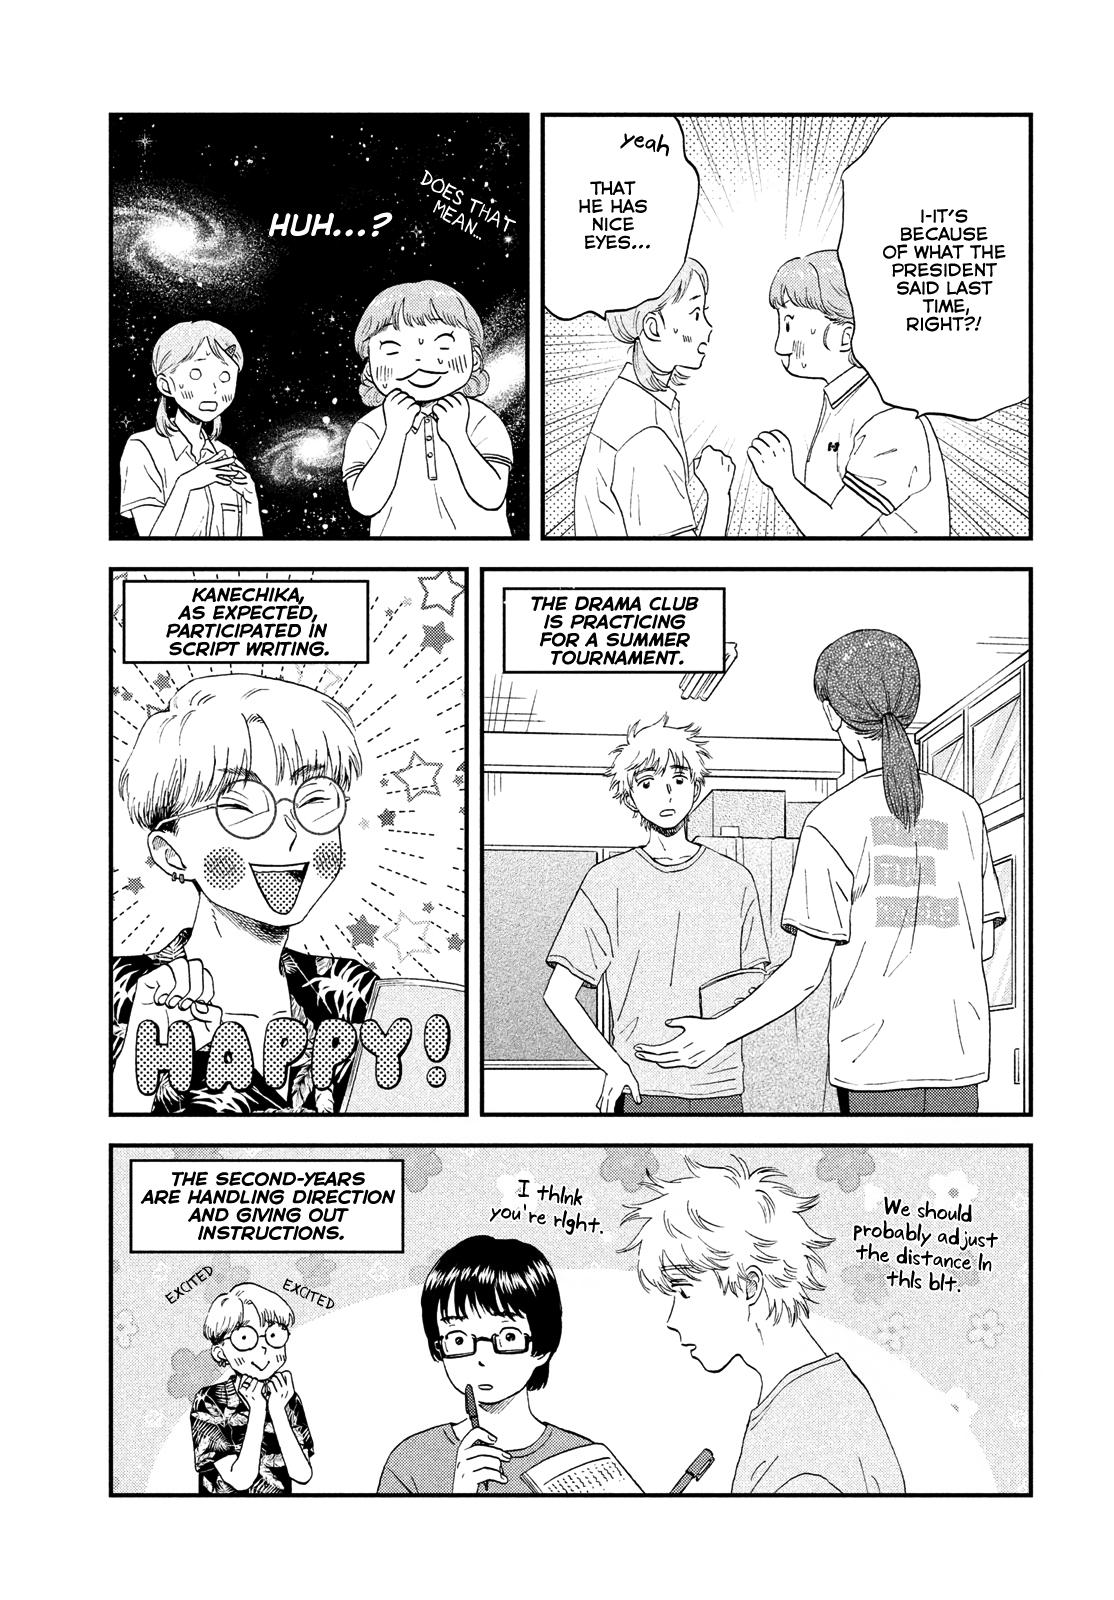 Read Skip To Loafer Chapter 50: Awkward School Day on Mangakakalot